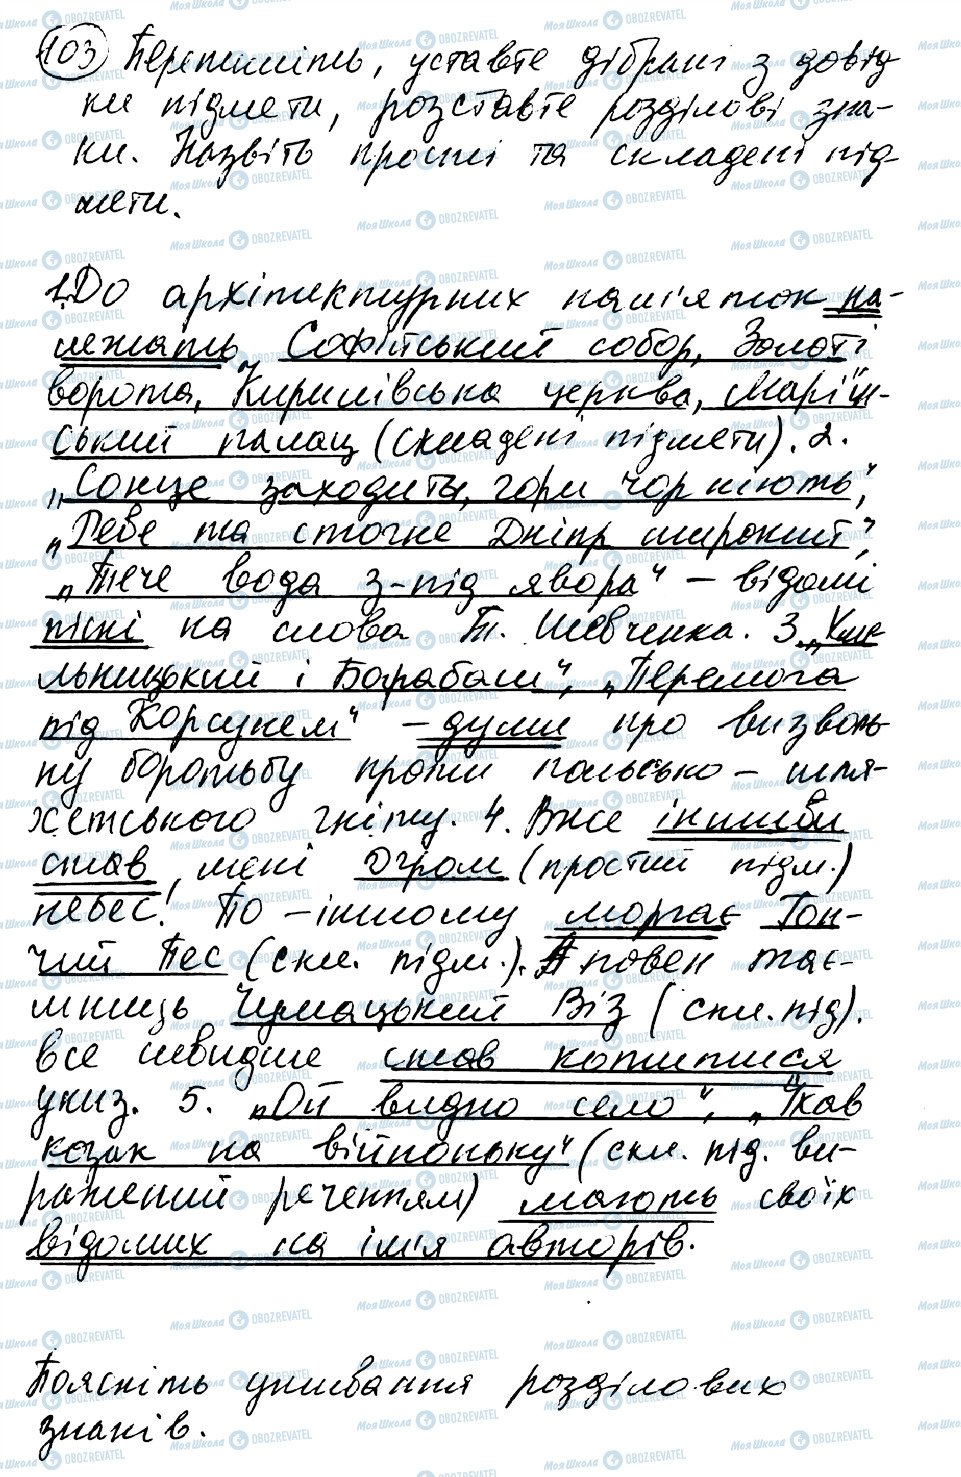 ГДЗ Укр мова 8 класс страница 103